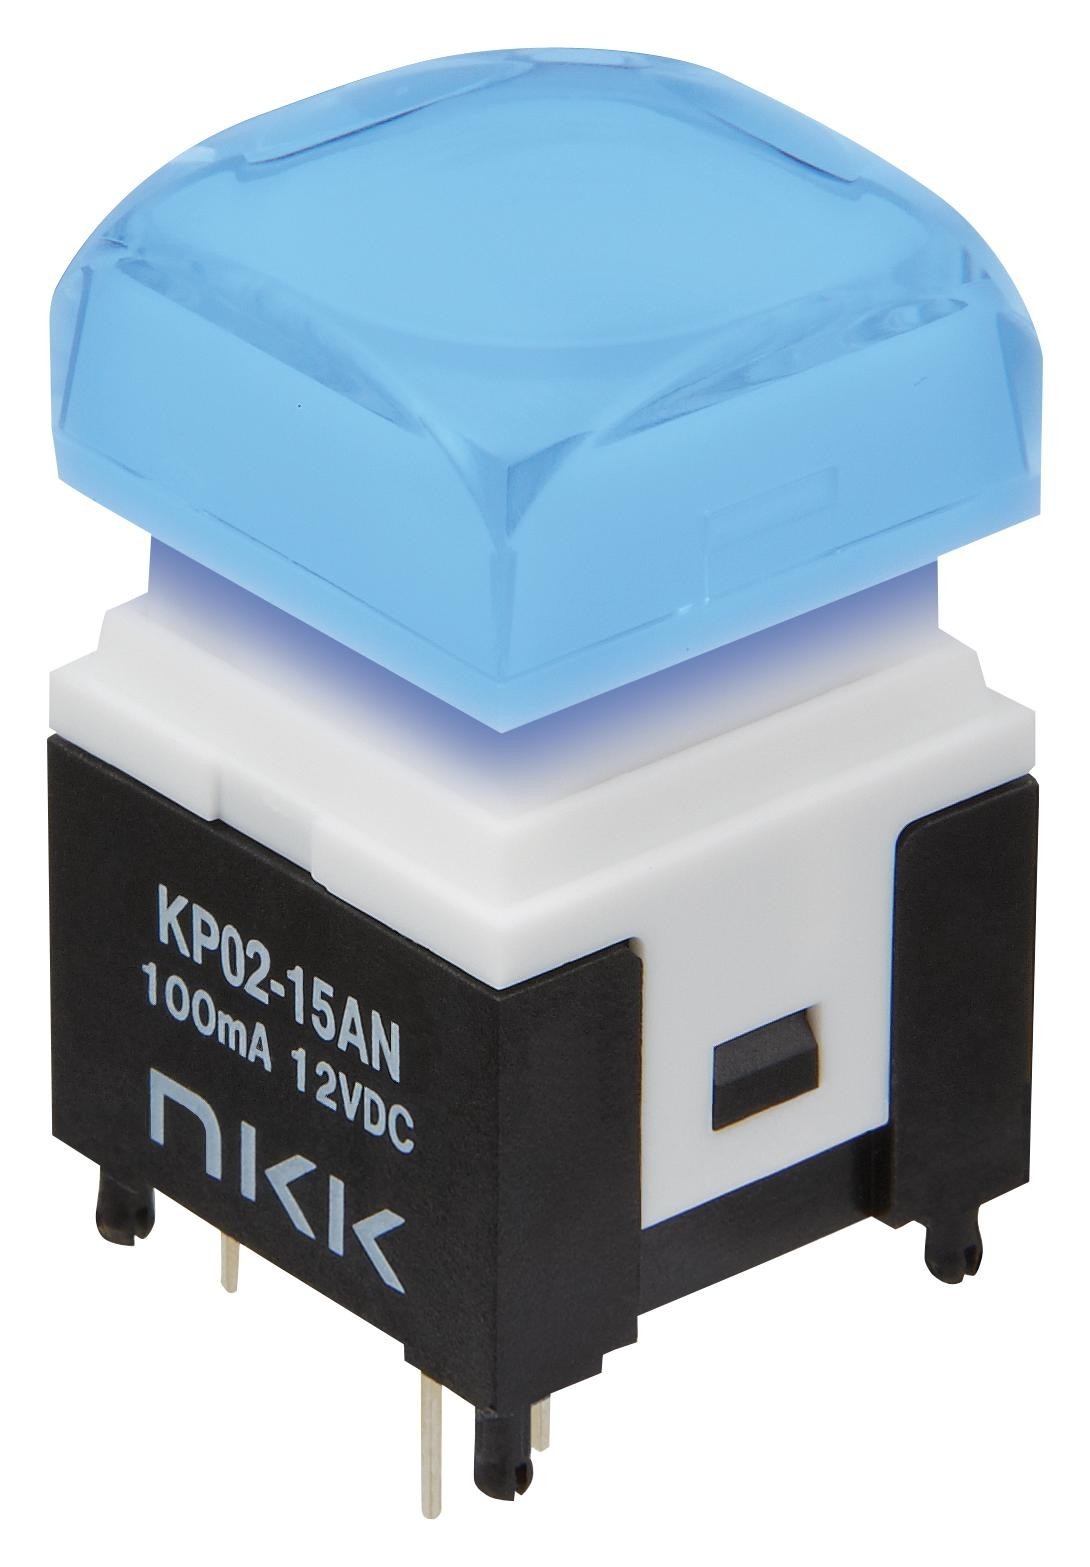 NKK Switches Kp0215Anbkg036G-3Sjb Miniature Illuminated Pushbutton